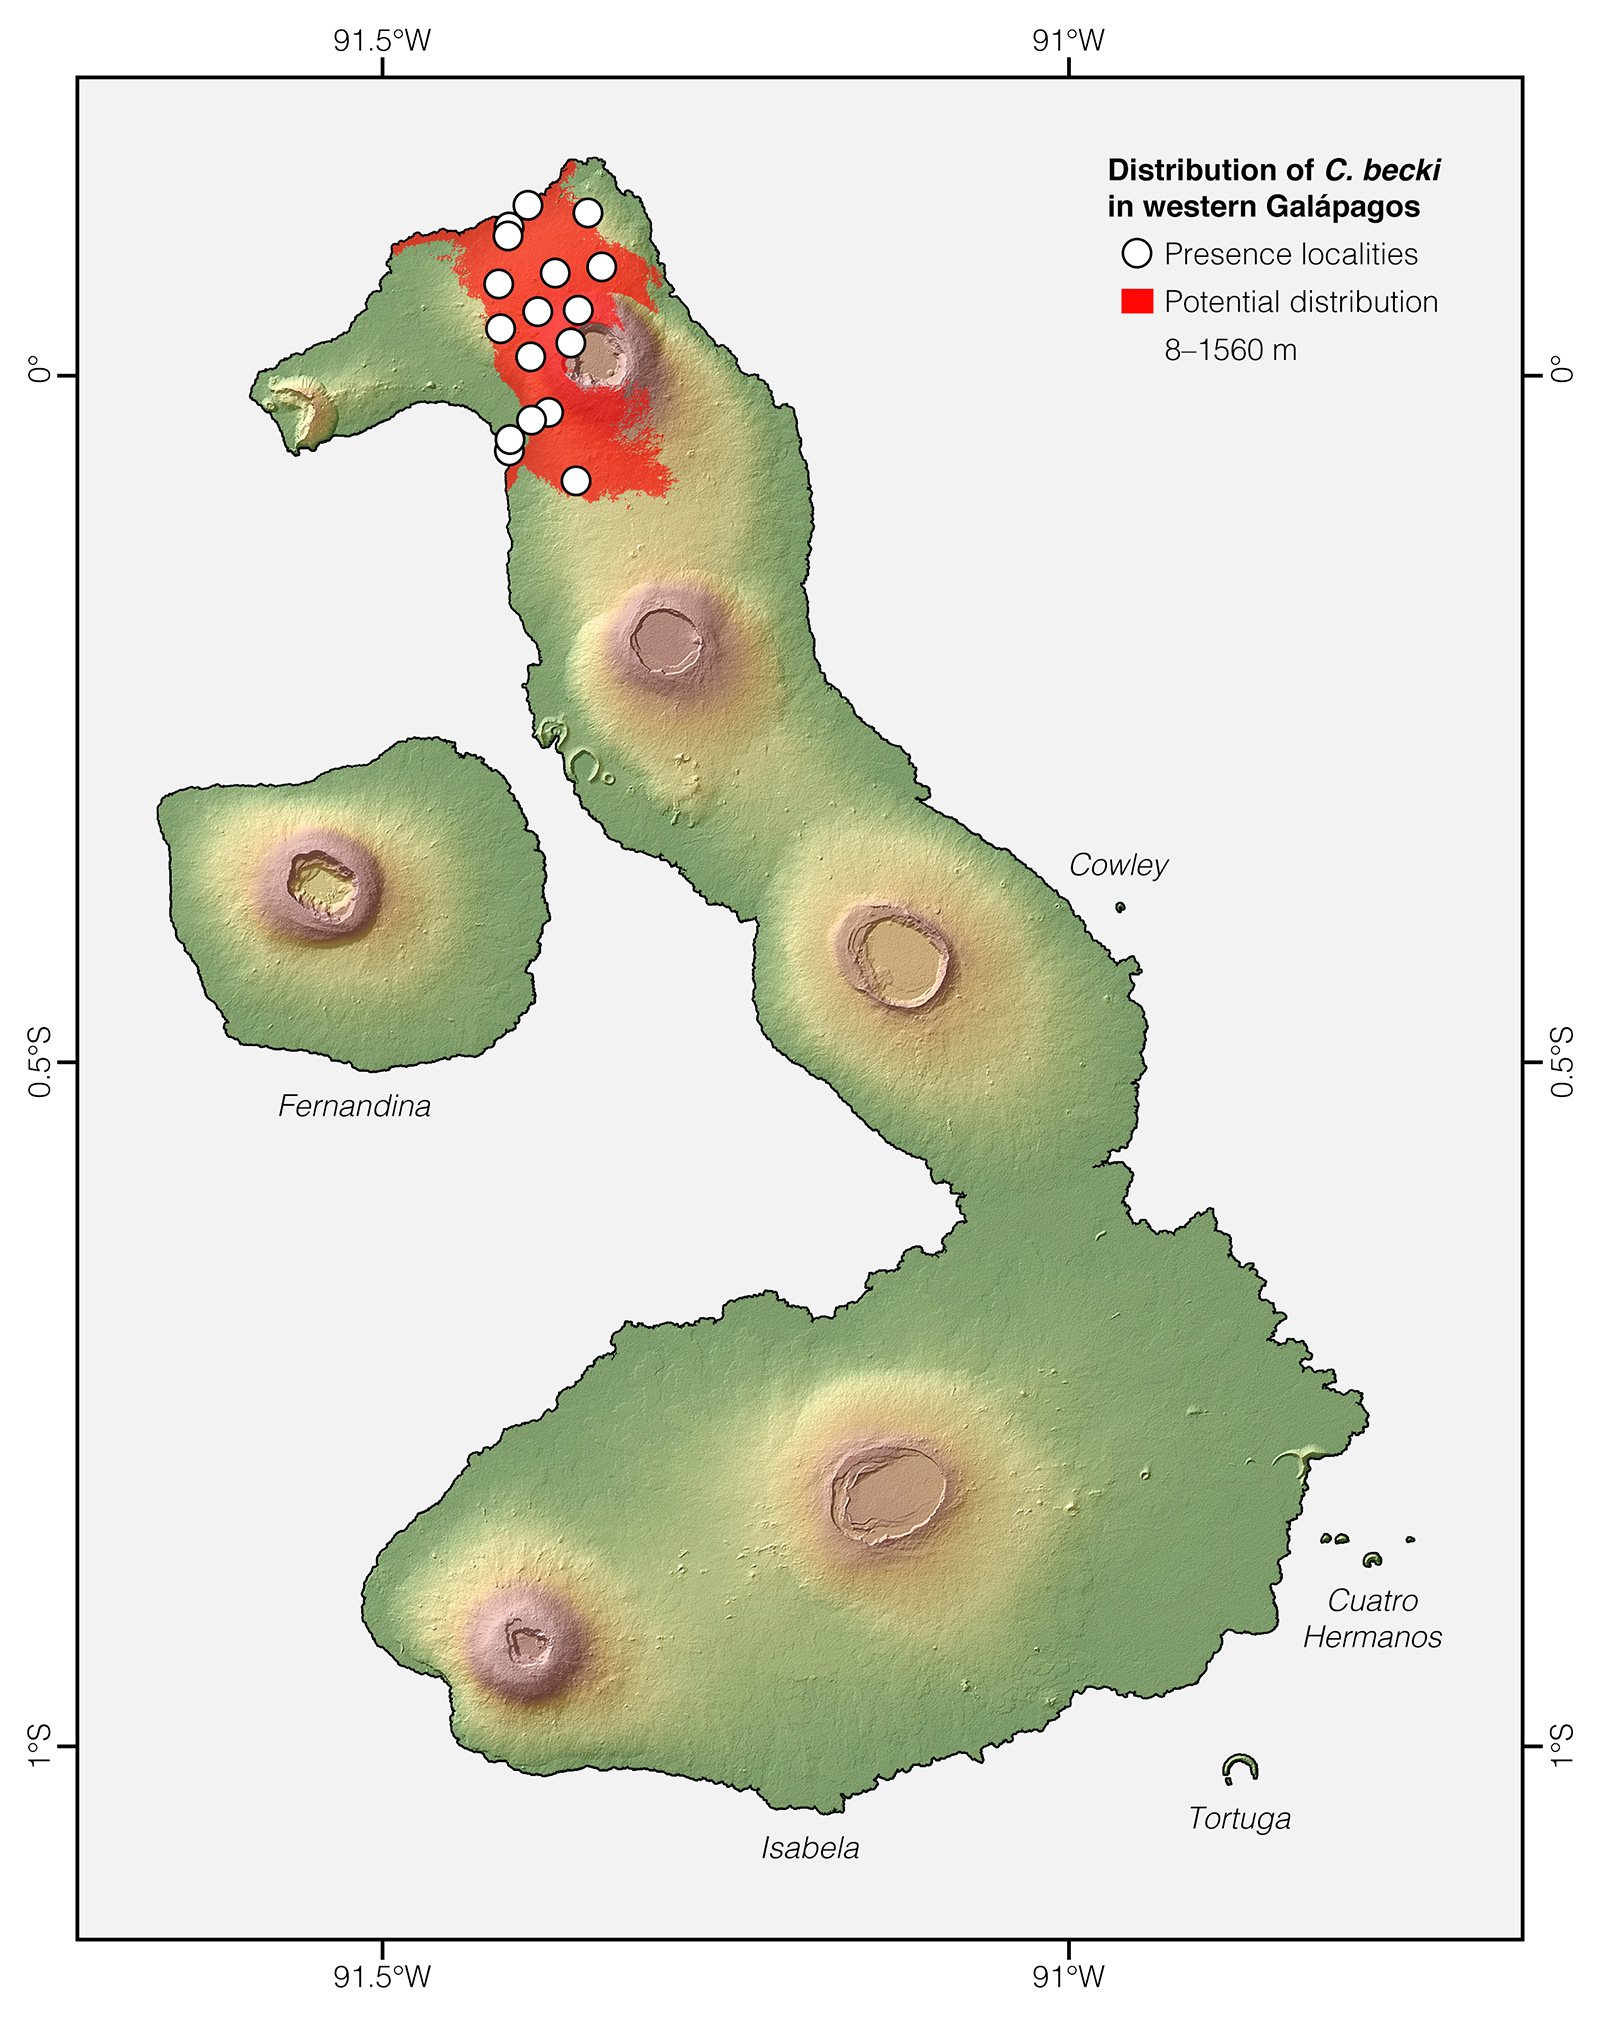 Distribution of Chelonoidis becki in western Galápagos